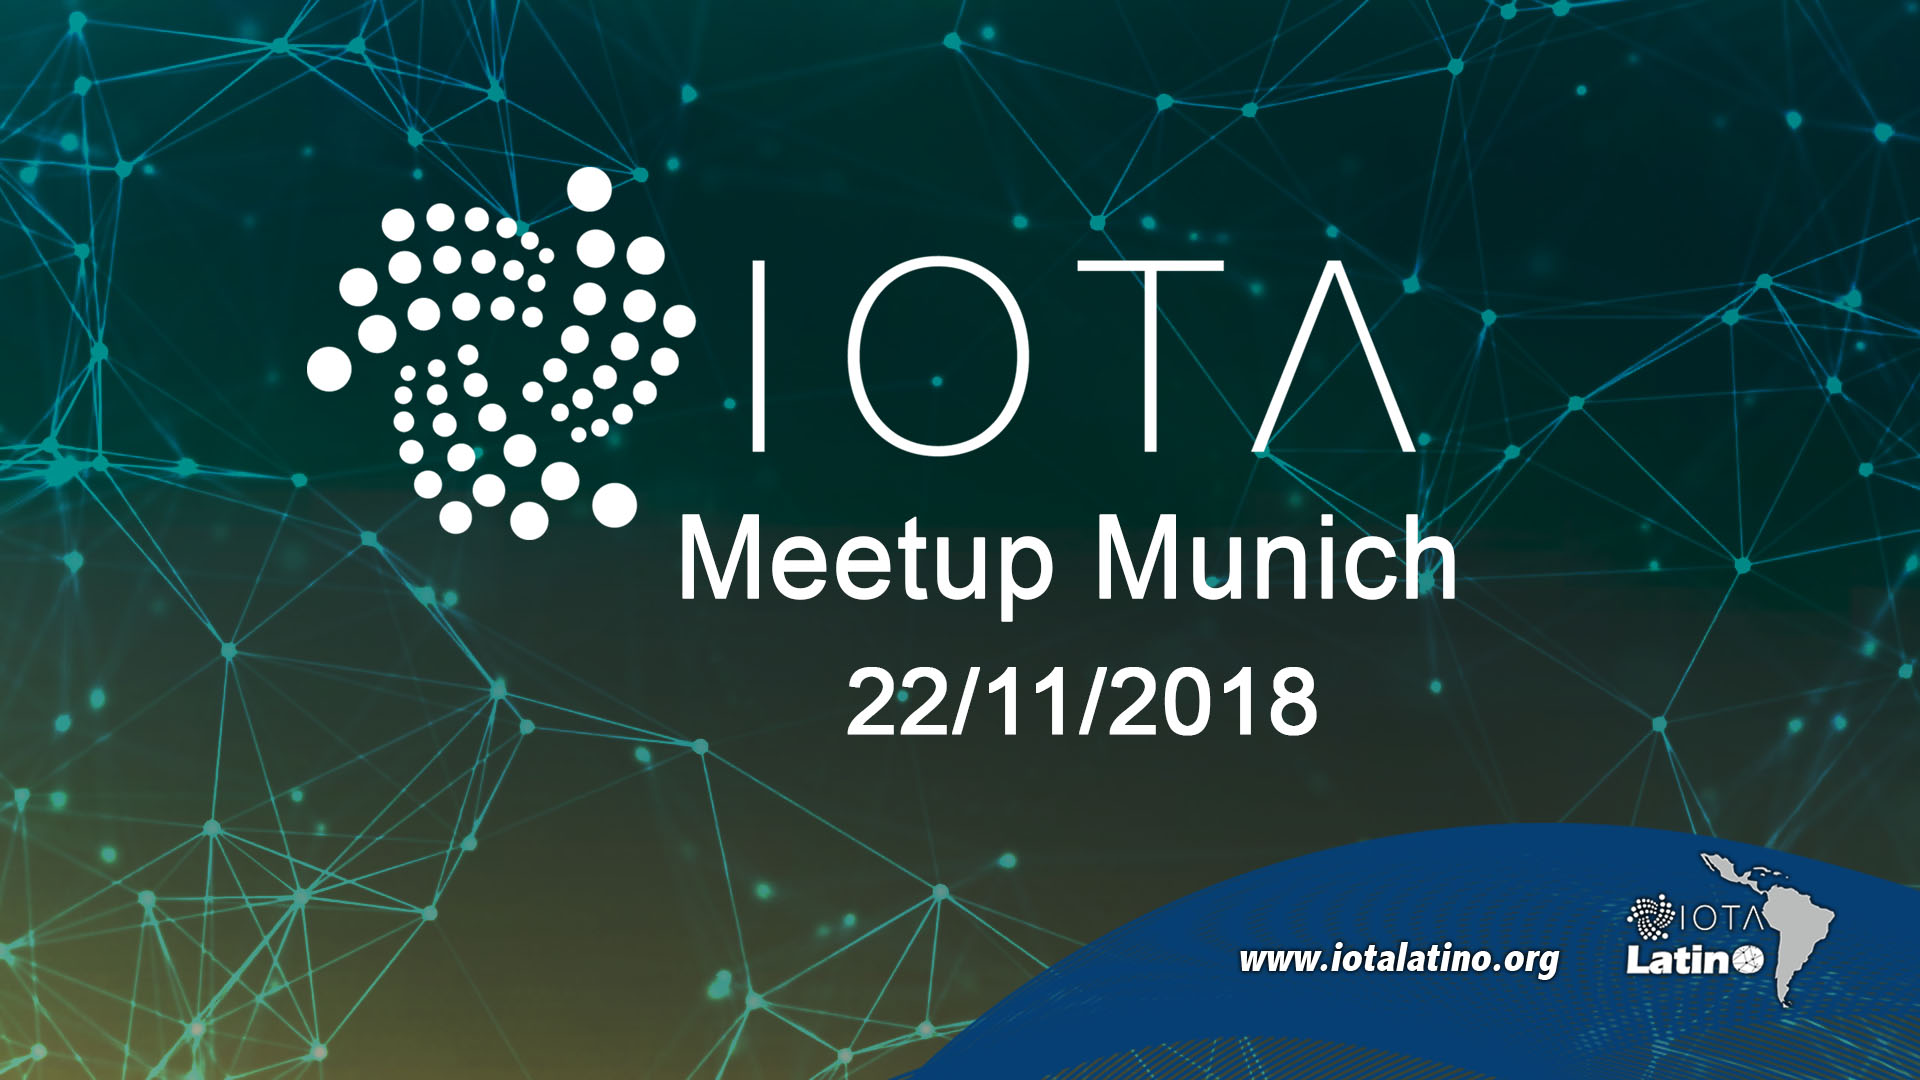 IOTA Meetup Munich